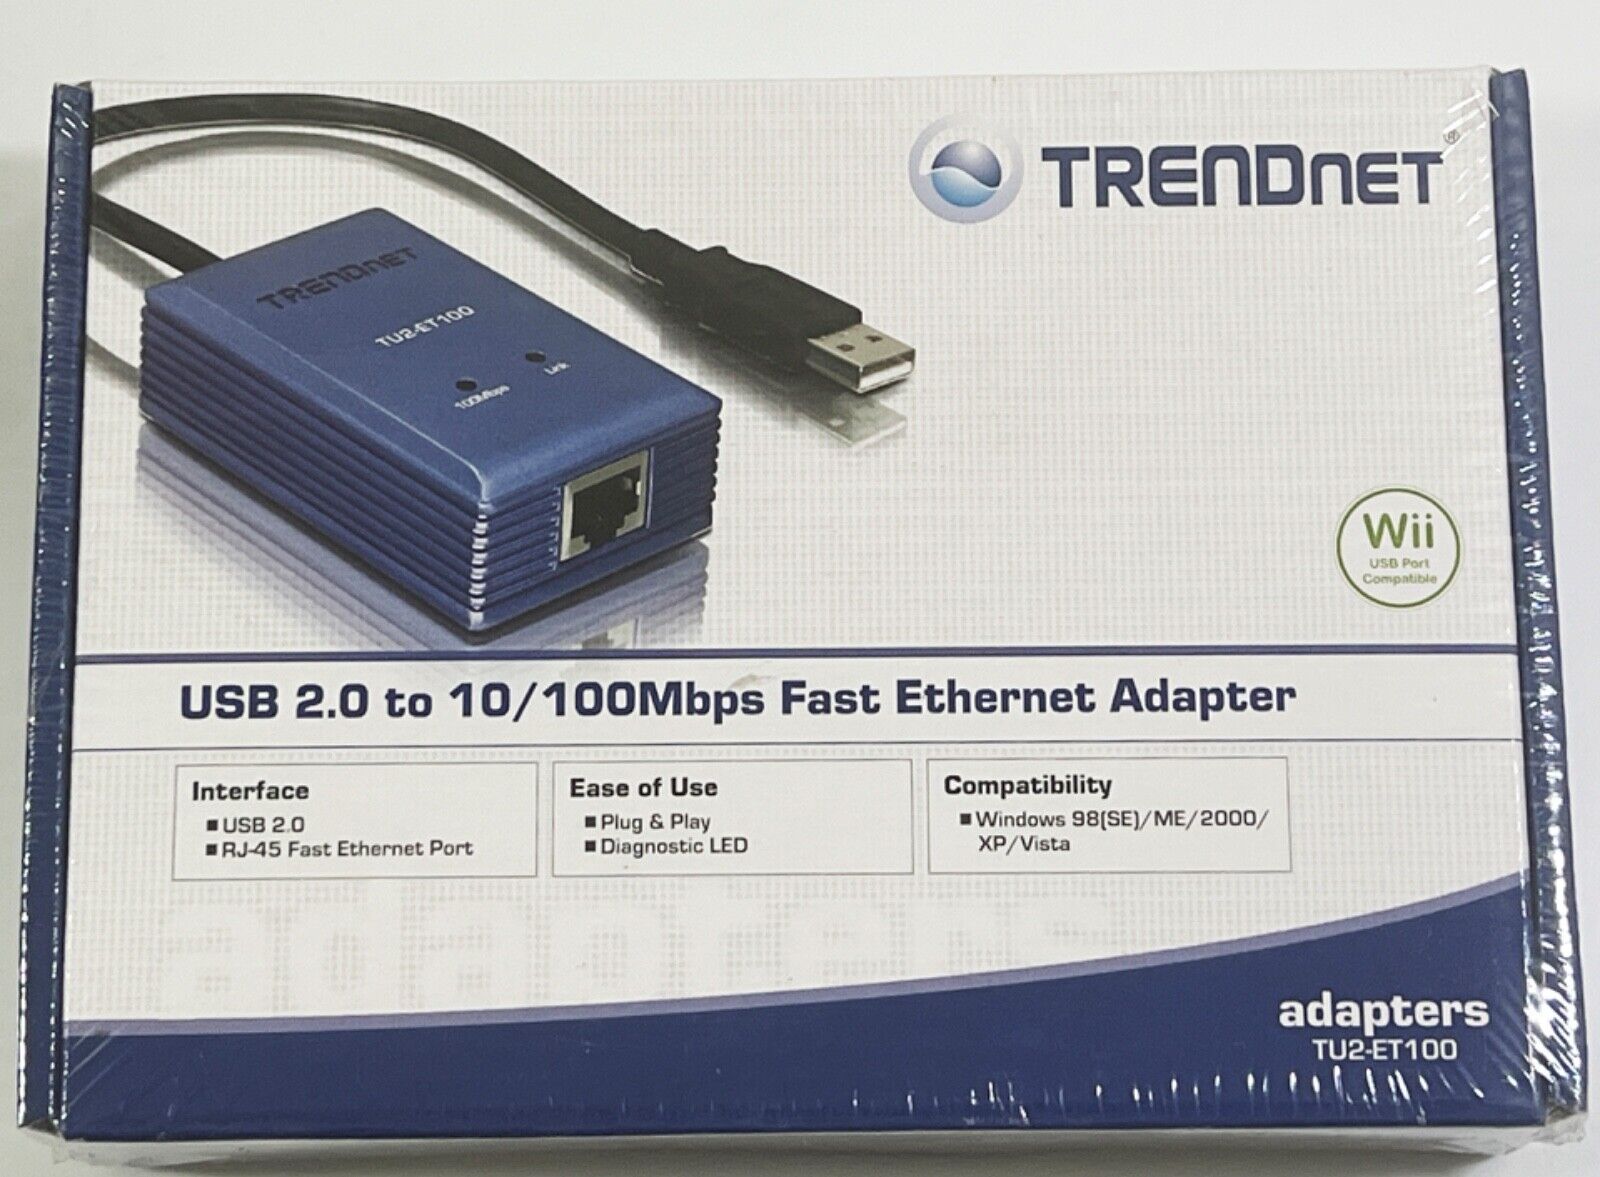 TRENDnet TU2-ET100 Fast Ethernet Adapter USB 2.0 to 10/100 Nintendo Wii Ready